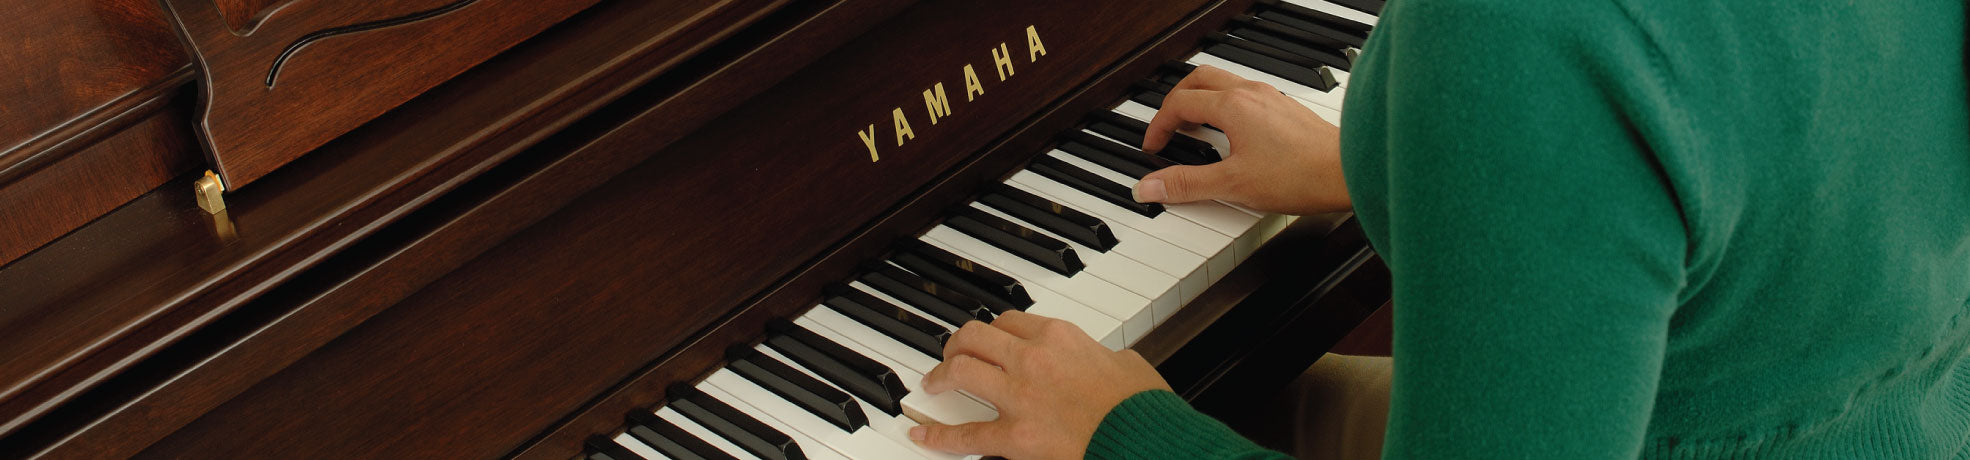 Yamaha Upright Pianos